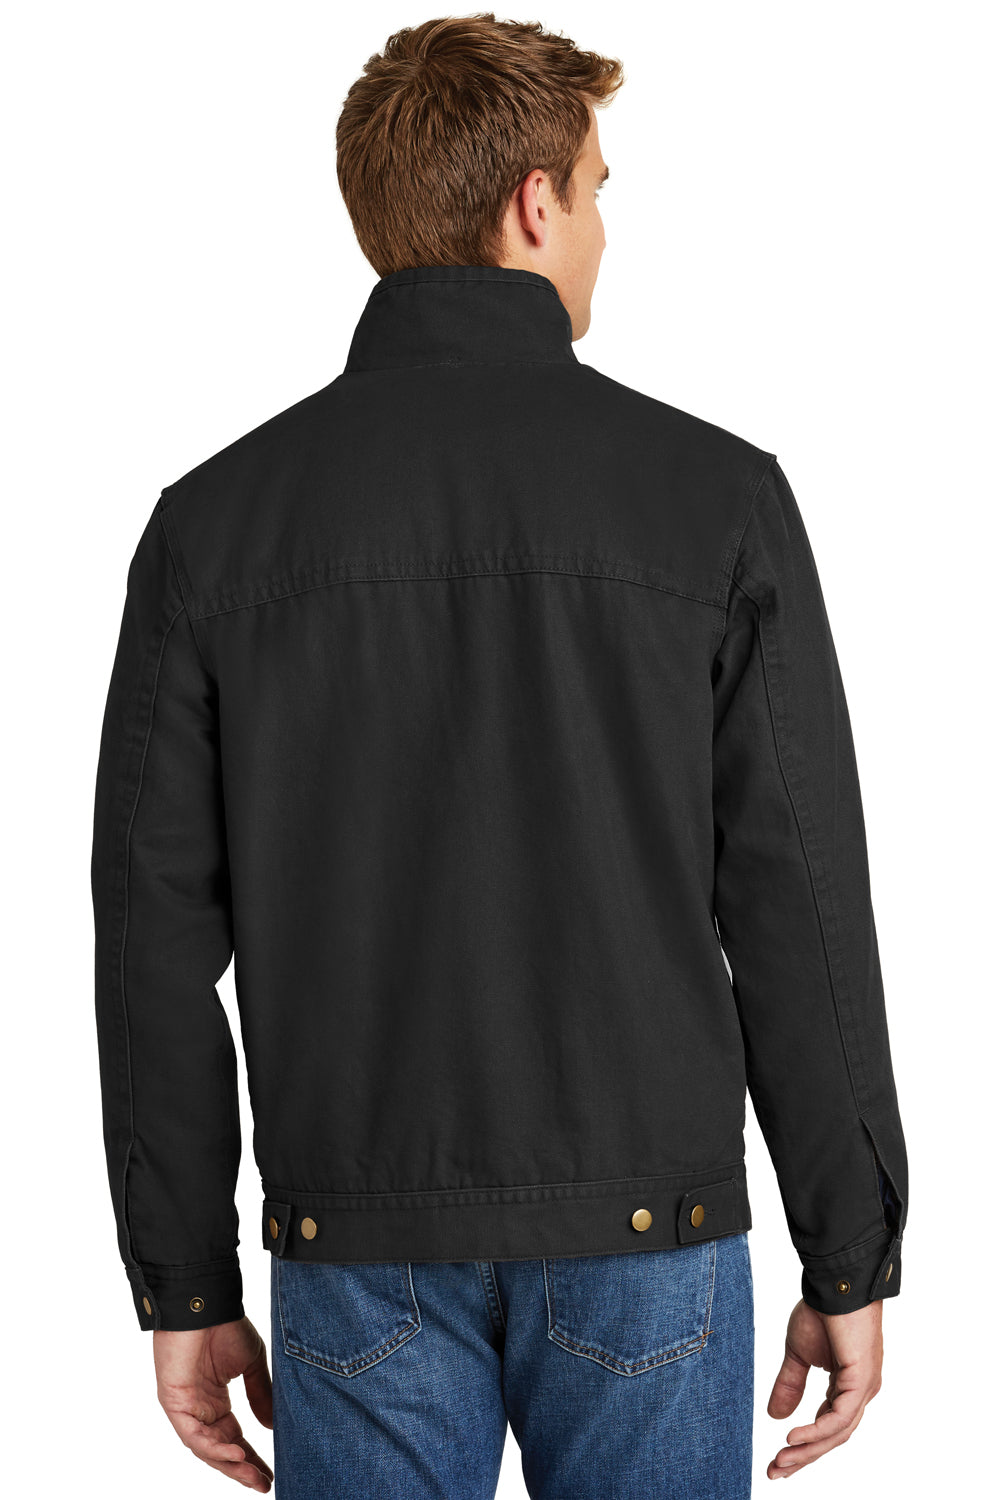 CornerStone CSJ40 Mens Duck Cloth Full Zip Jacket Black Back